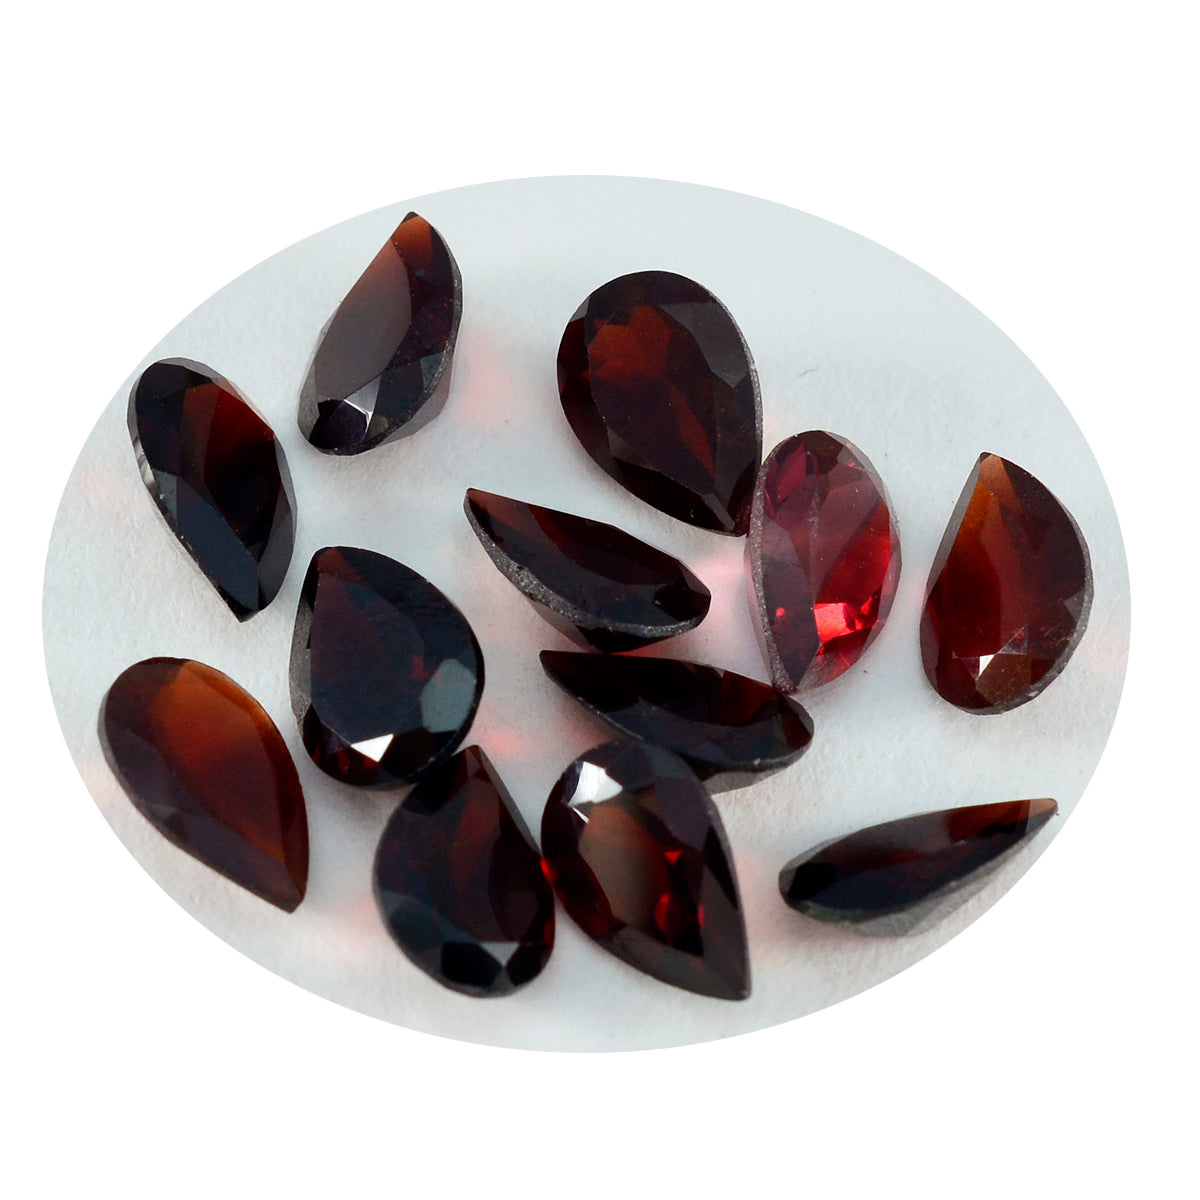 Riyogems 1PC Genuine Red Garnet Faceted 6x9 mm Pear Shape astonishing Quality Loose Gem